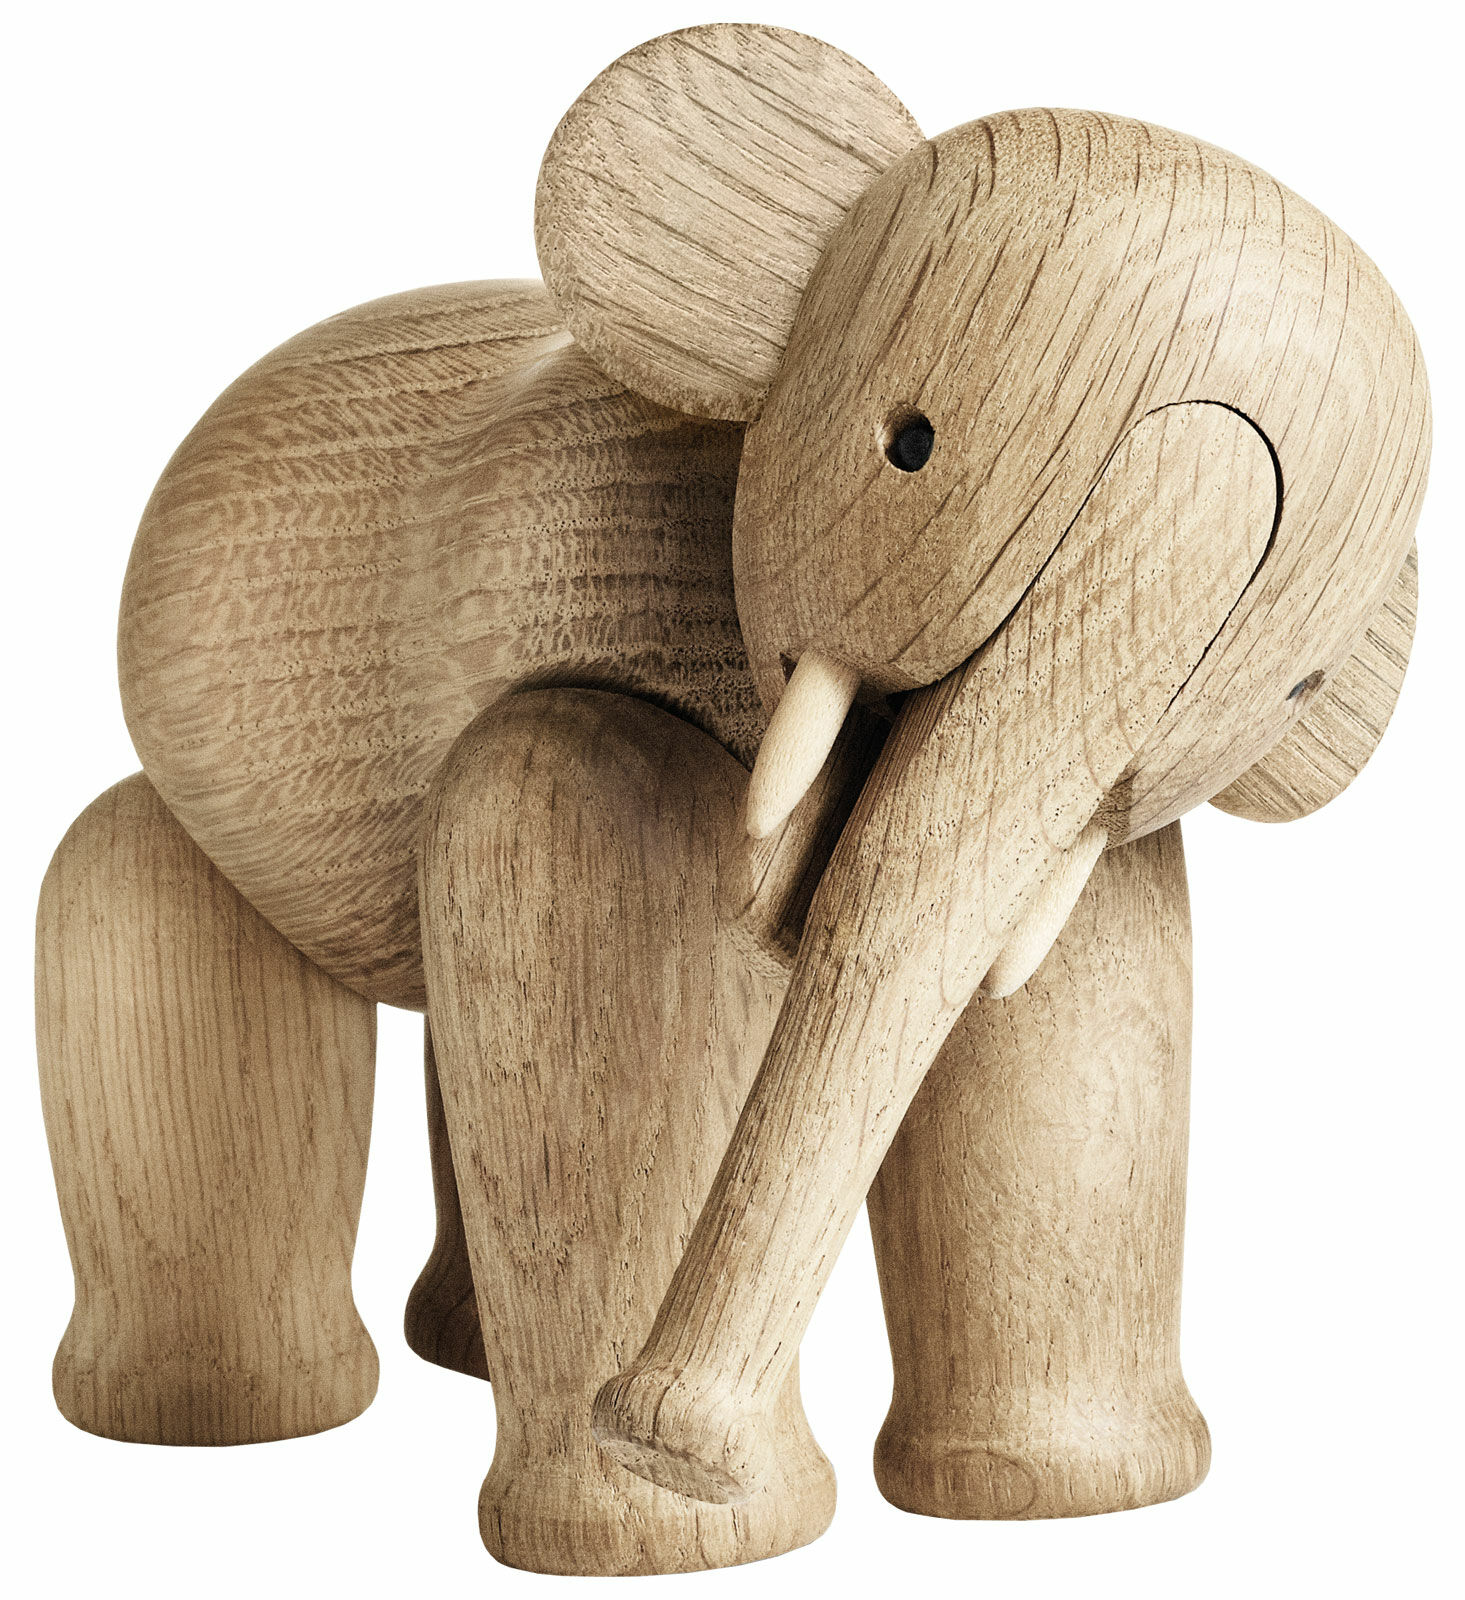 Holzfigur "Elefant" von Kay Bojesen